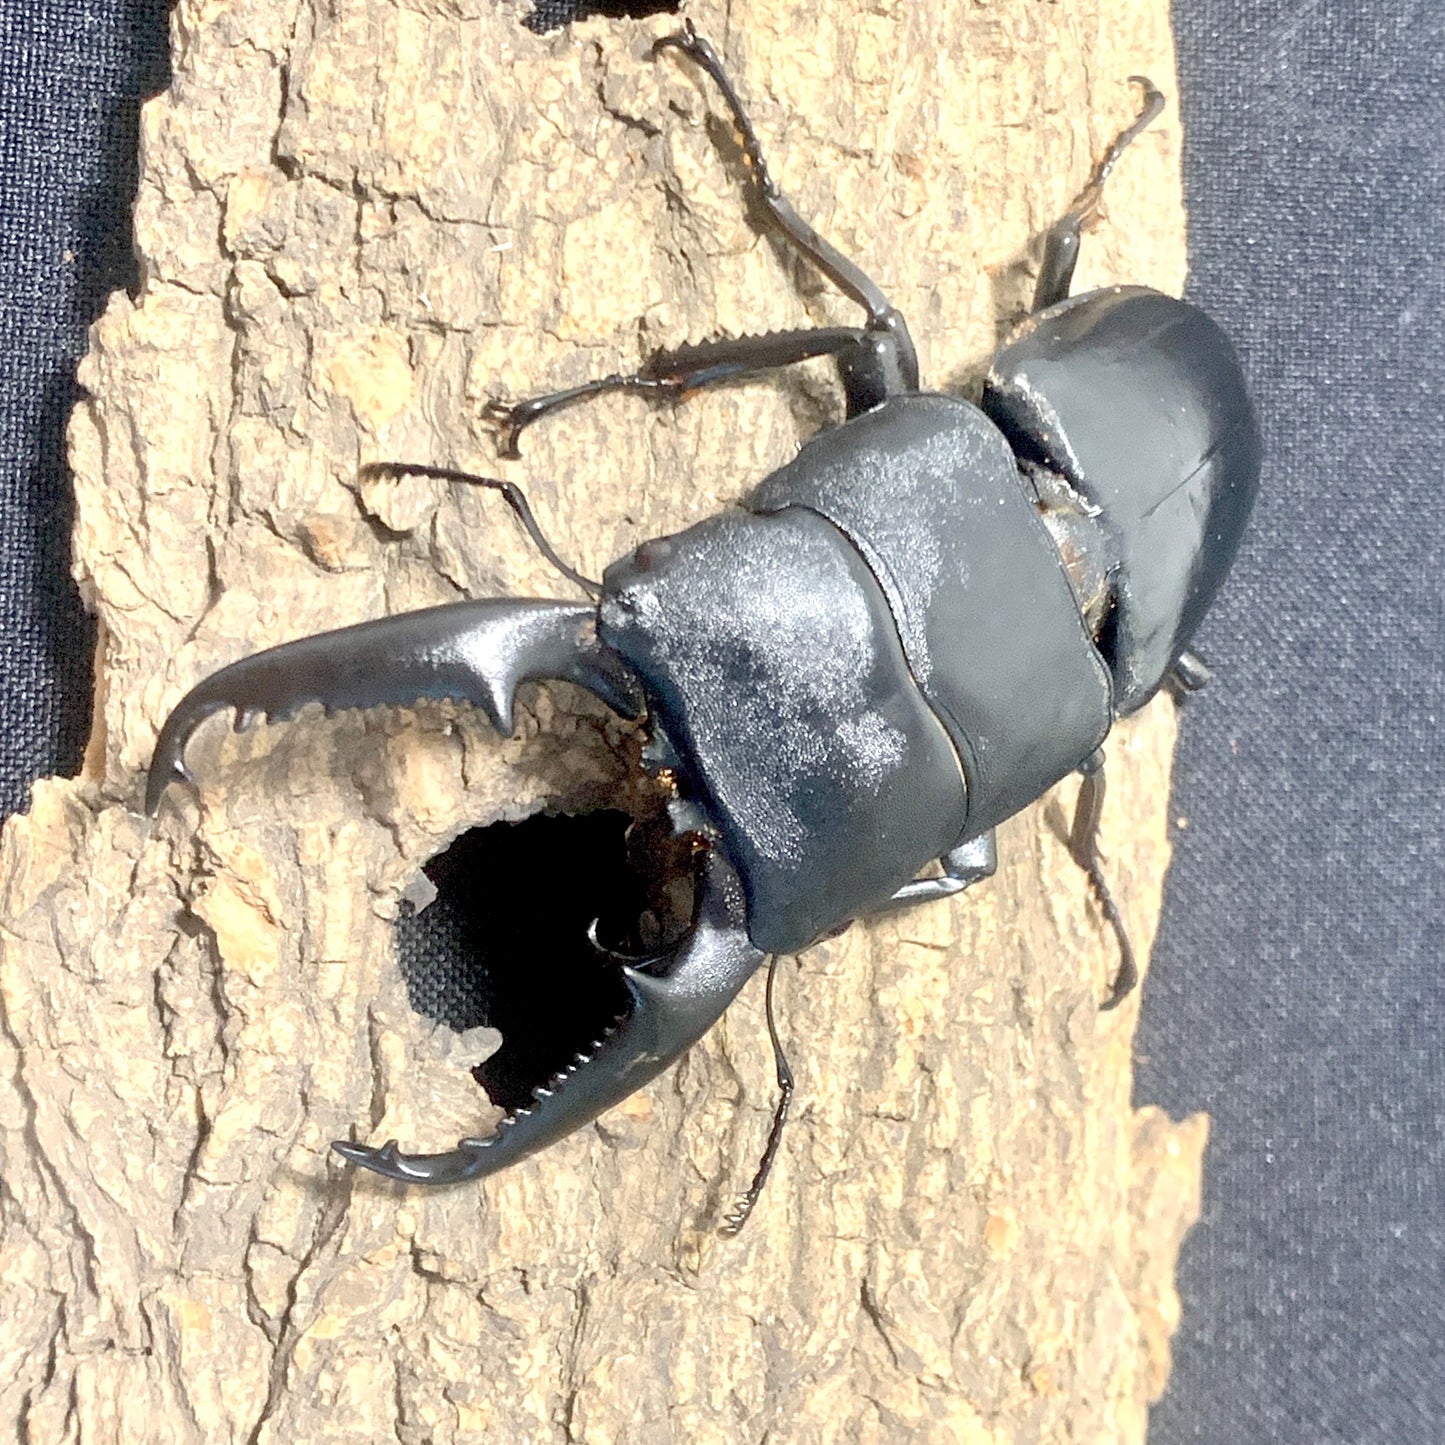 Dorcus titanus palawanicus (Palawan Stag Beetle)